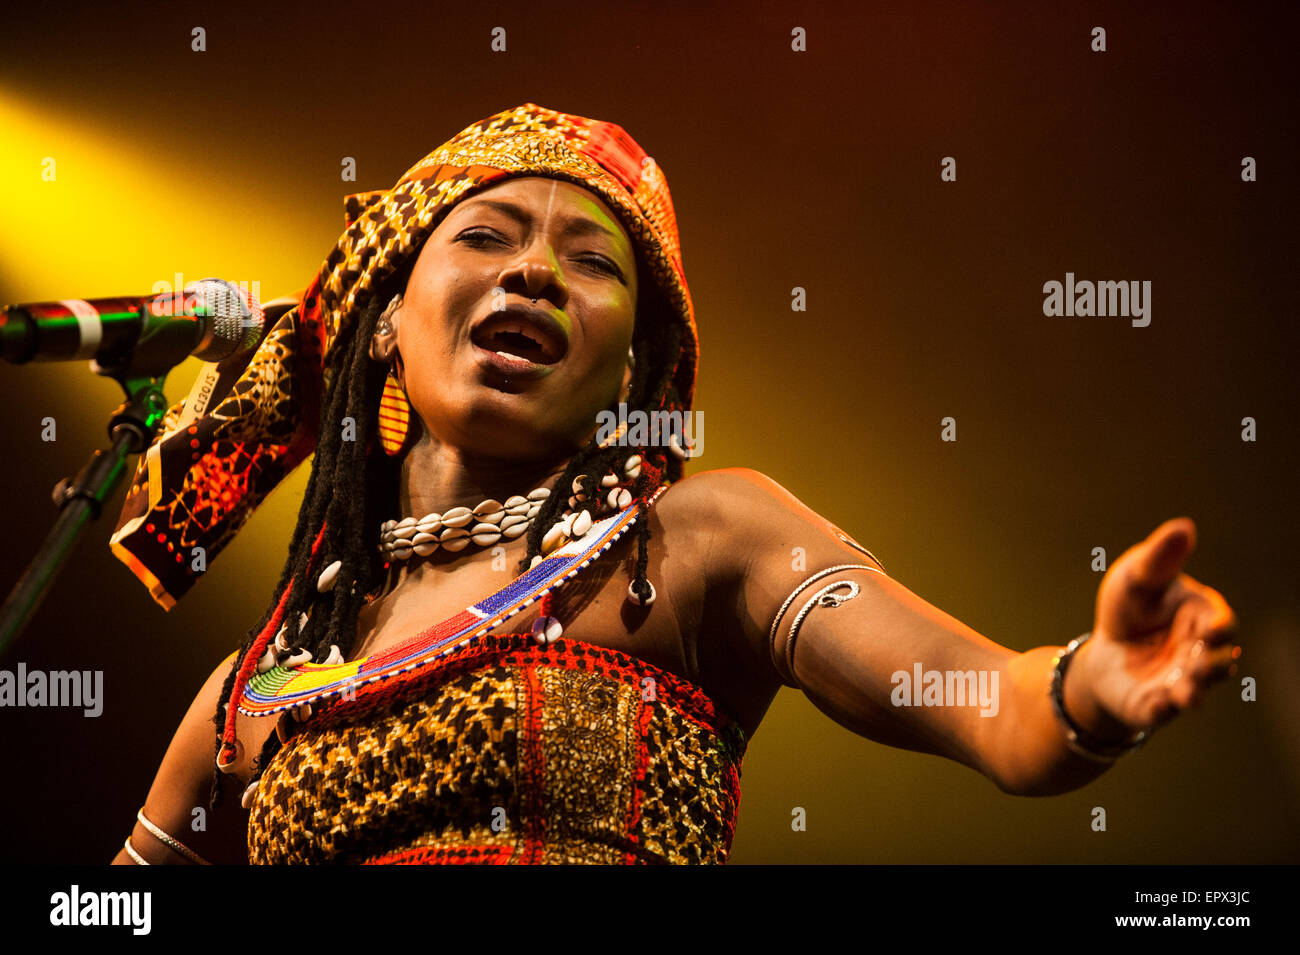 Fatoumata Diawara & Roberto Fonseca performing live at music festival WOMAD, Charlton Park, Angleterre, Royaume-Uni. 27 juillet 2015. Banque D'Images